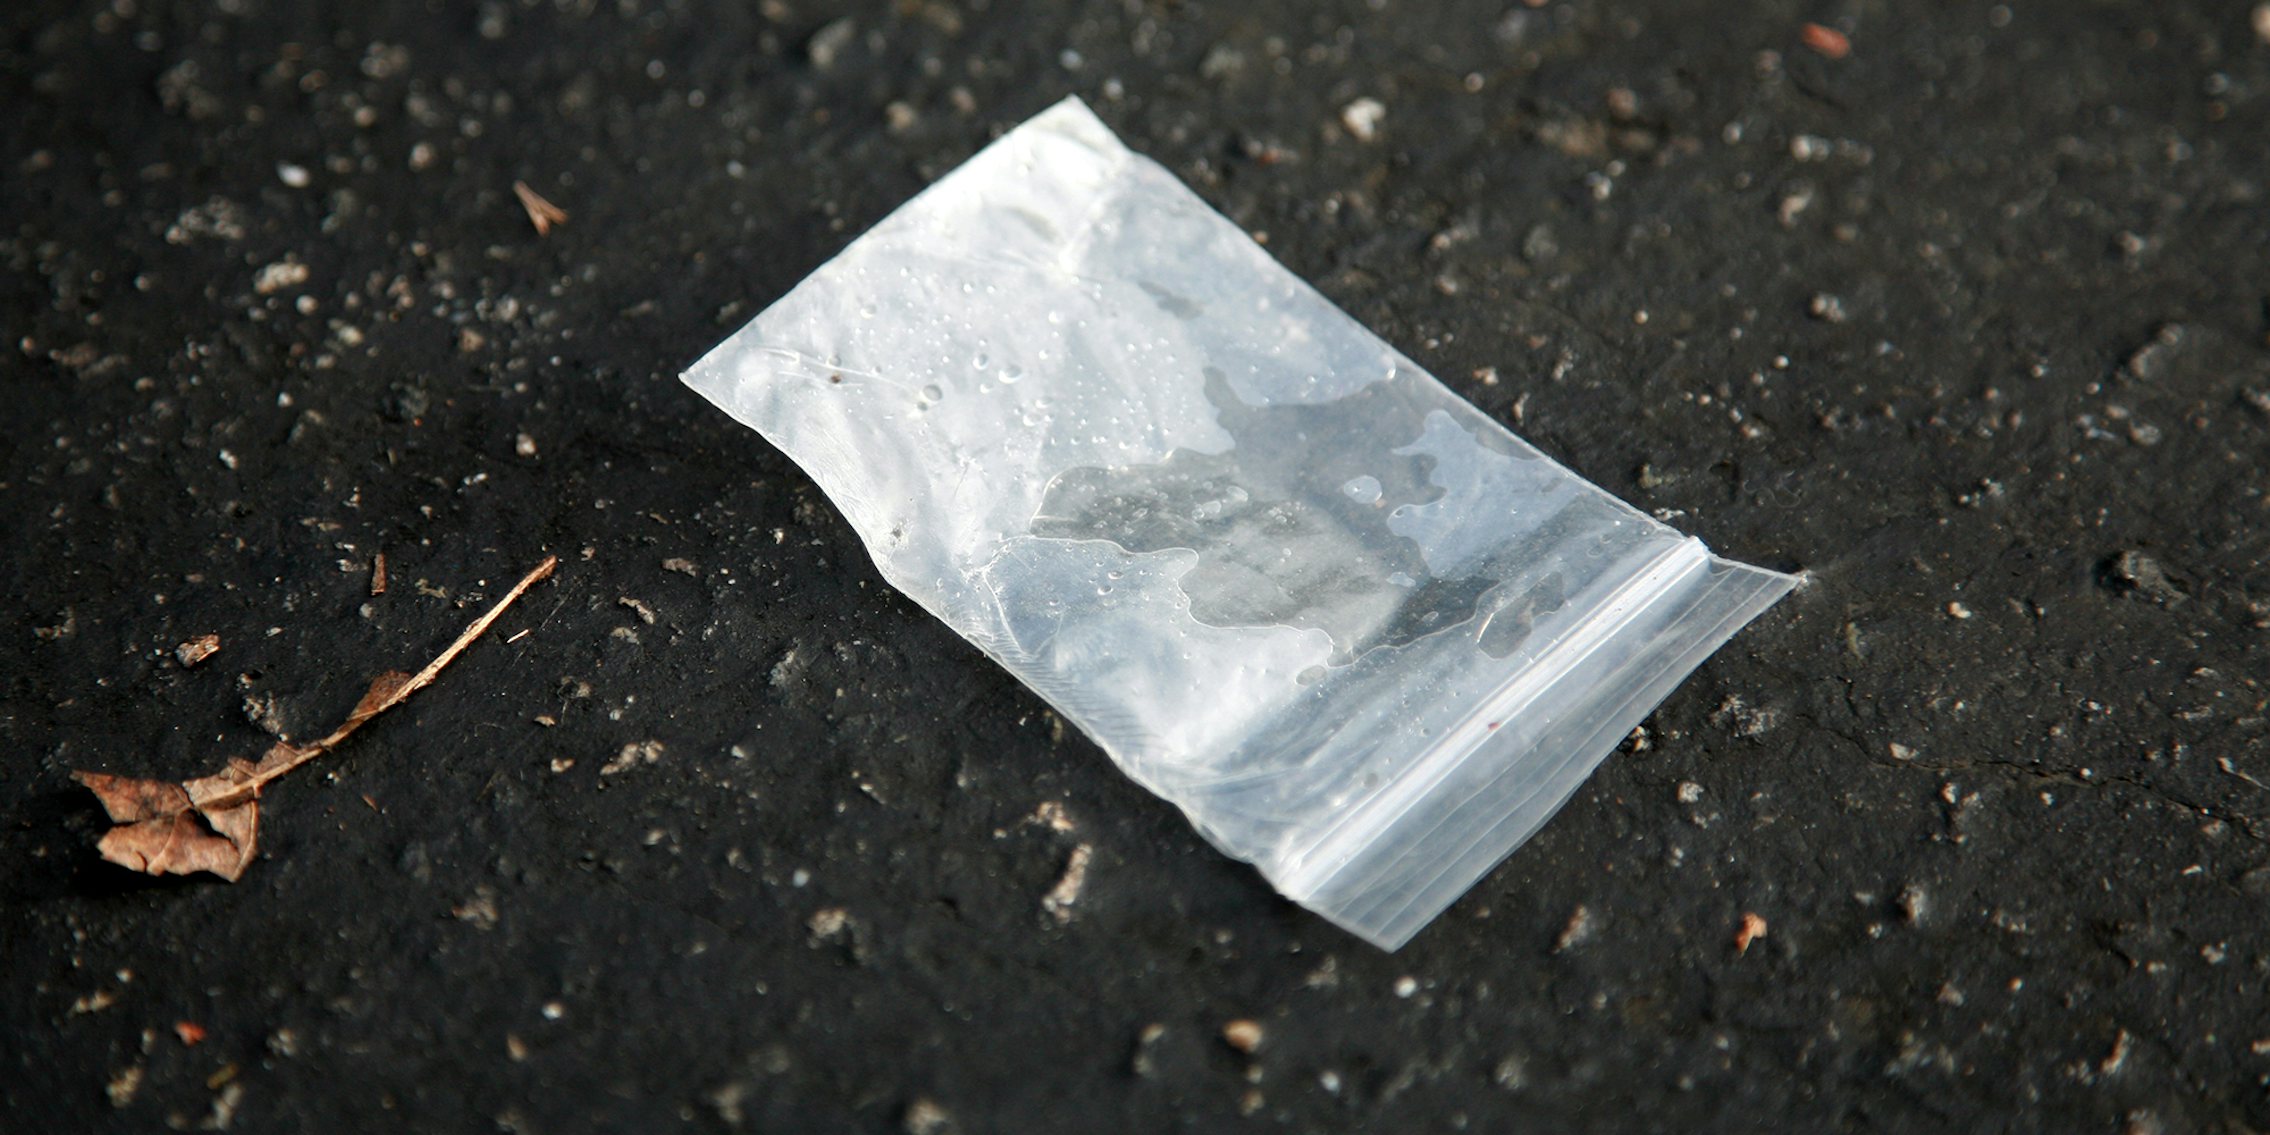 empty drug baggie highlighting police fentanyl overdoses